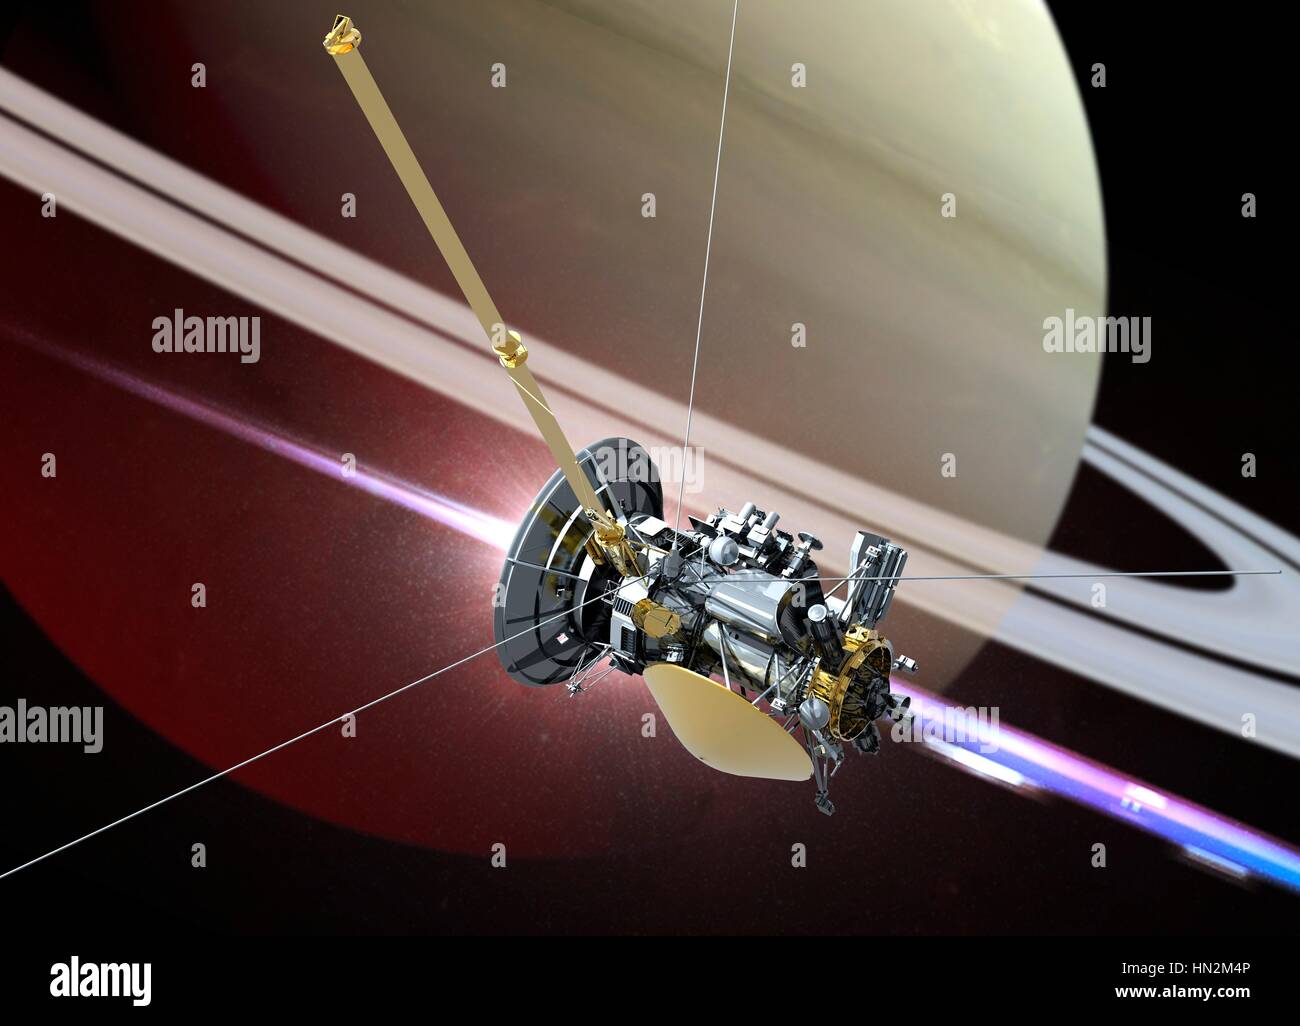 Cassini and Saturn, illustration. Stock Photo